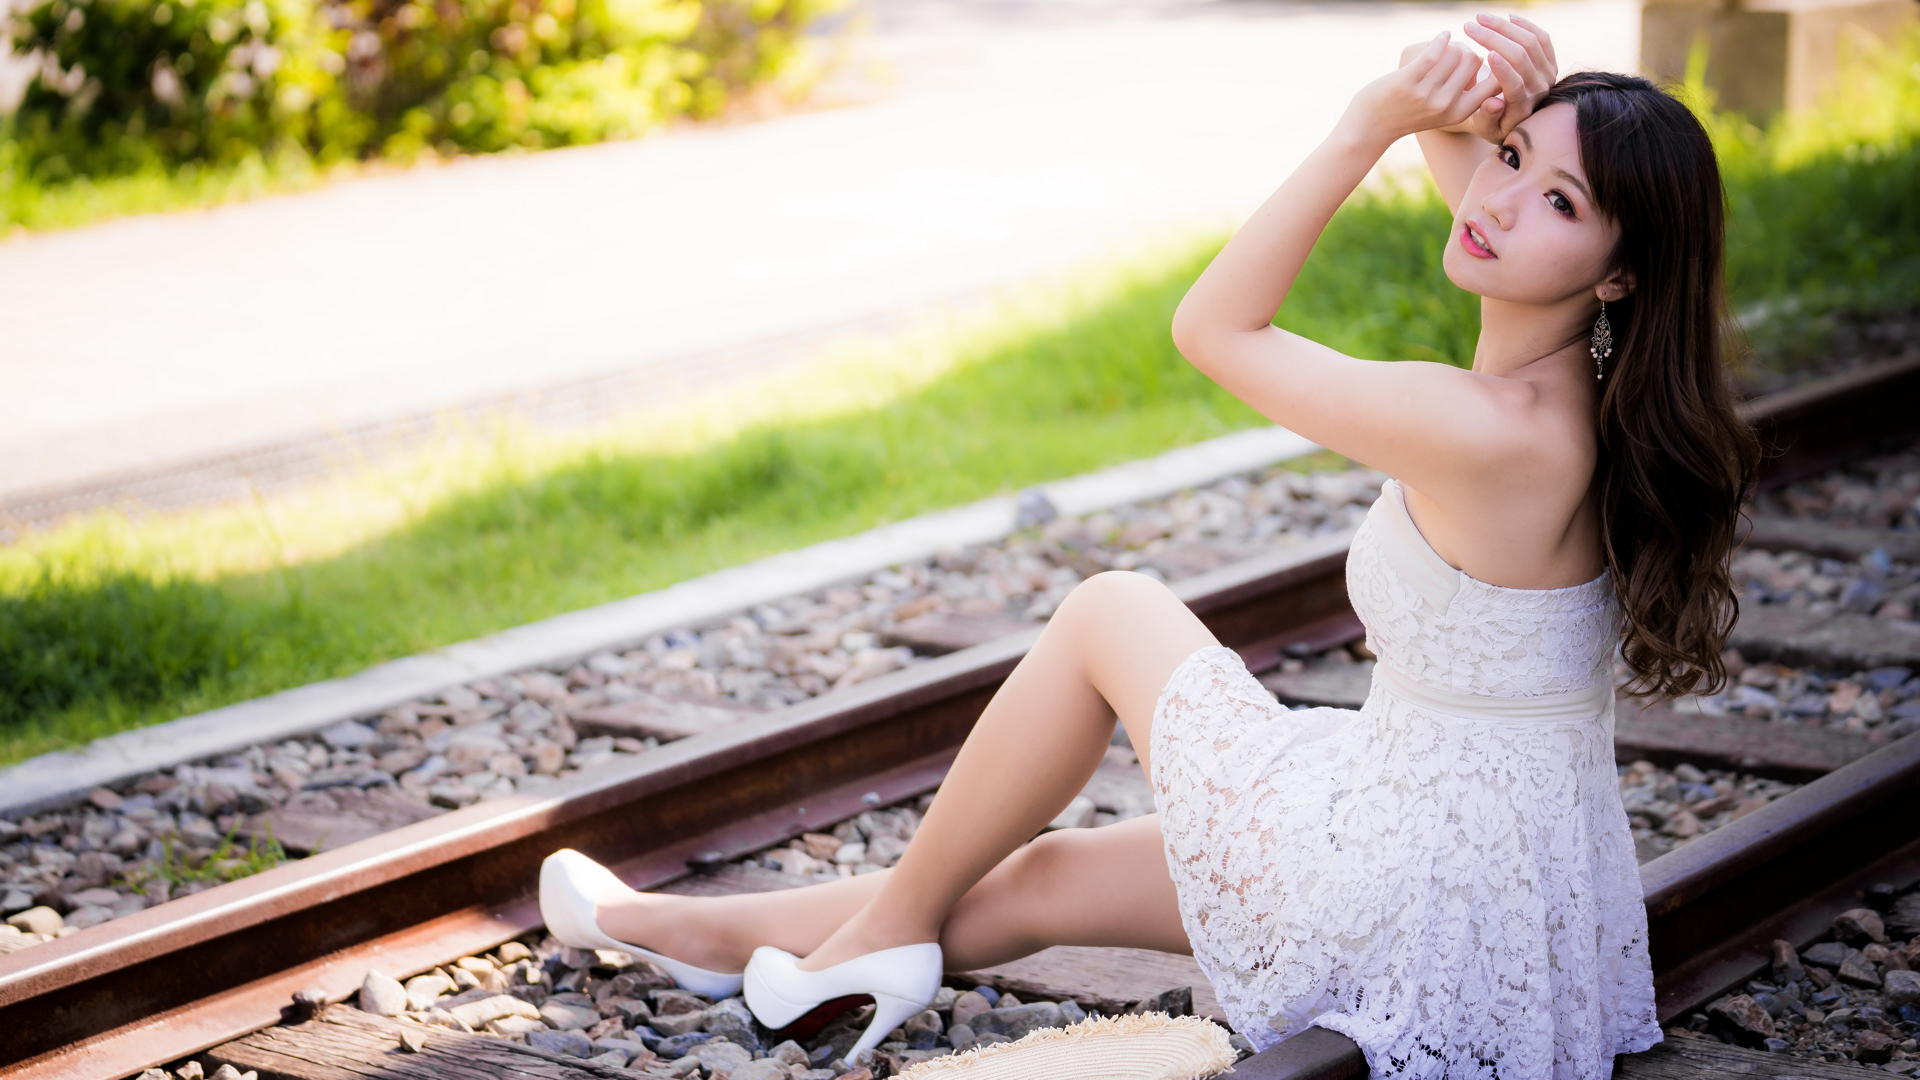 Asian Model Women Long Hair Dark Hair White Dress Sitting White High Heels Railway Depth Of Field Gr 1920x1080